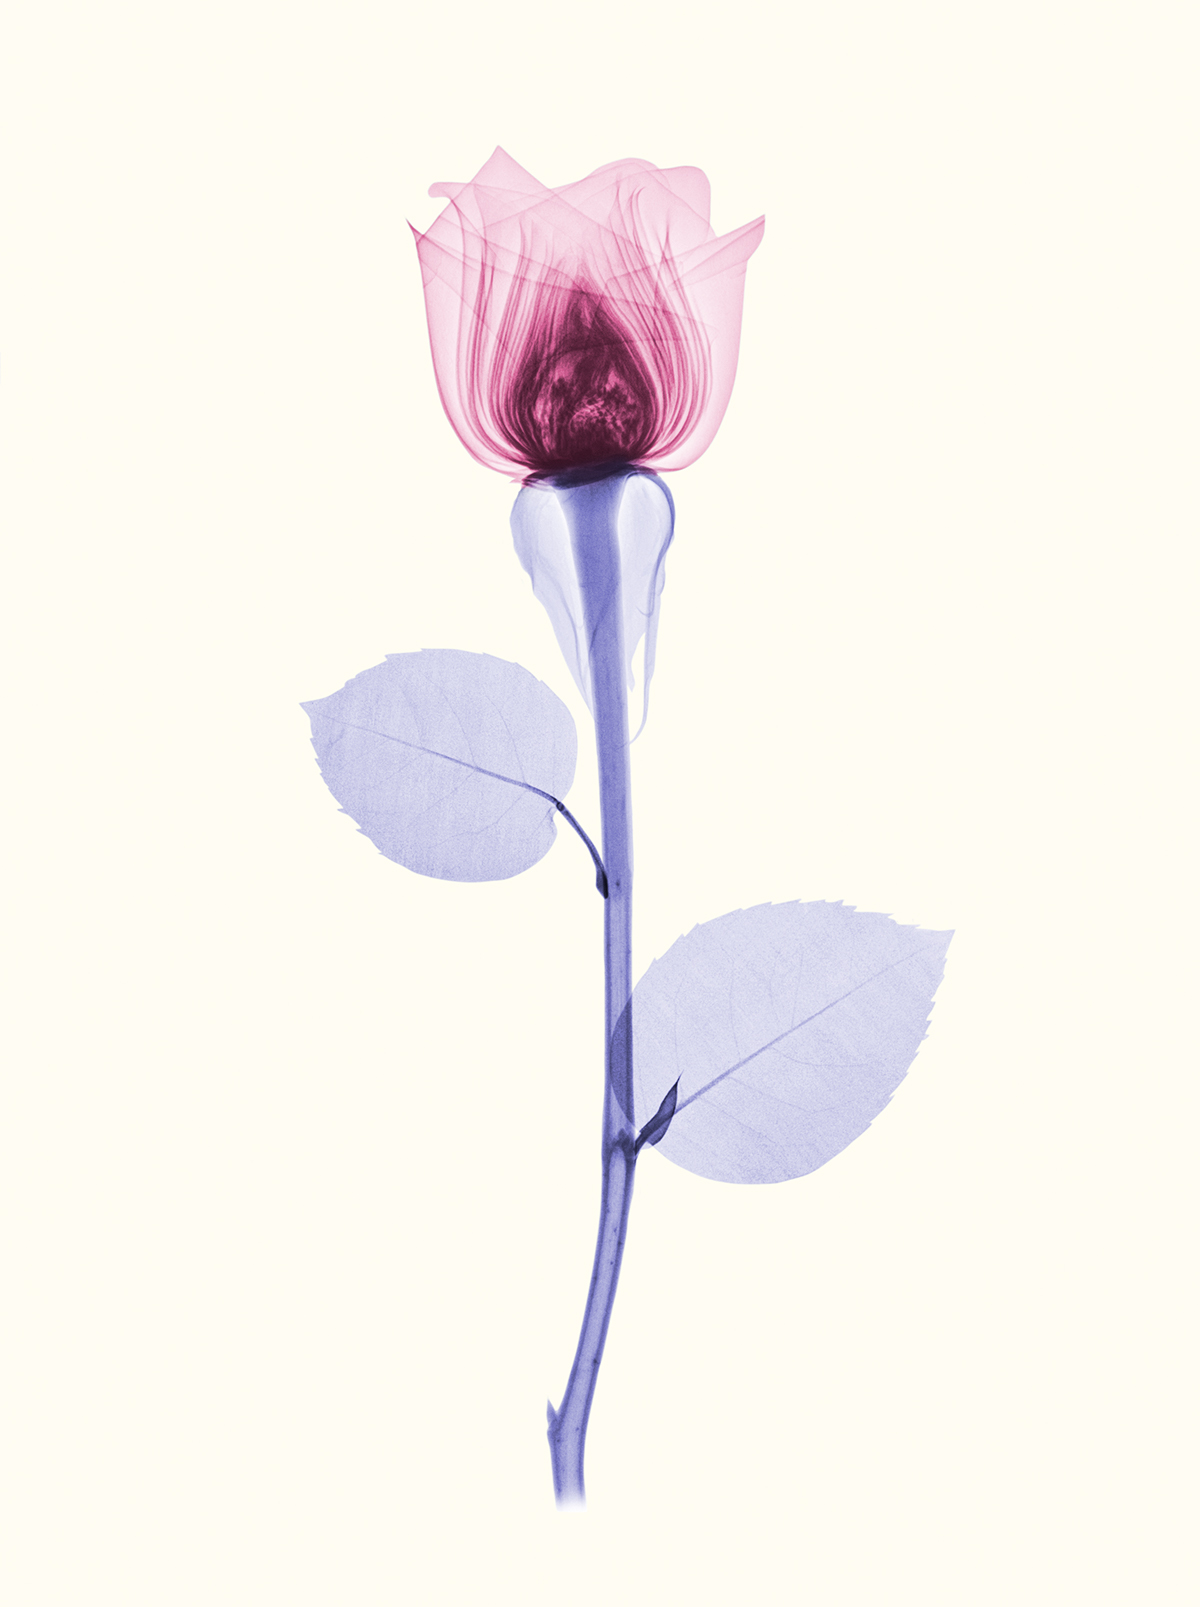 flower x-ray floral rose Medical imaging radiography botanical Digital Art  Flowers scientific